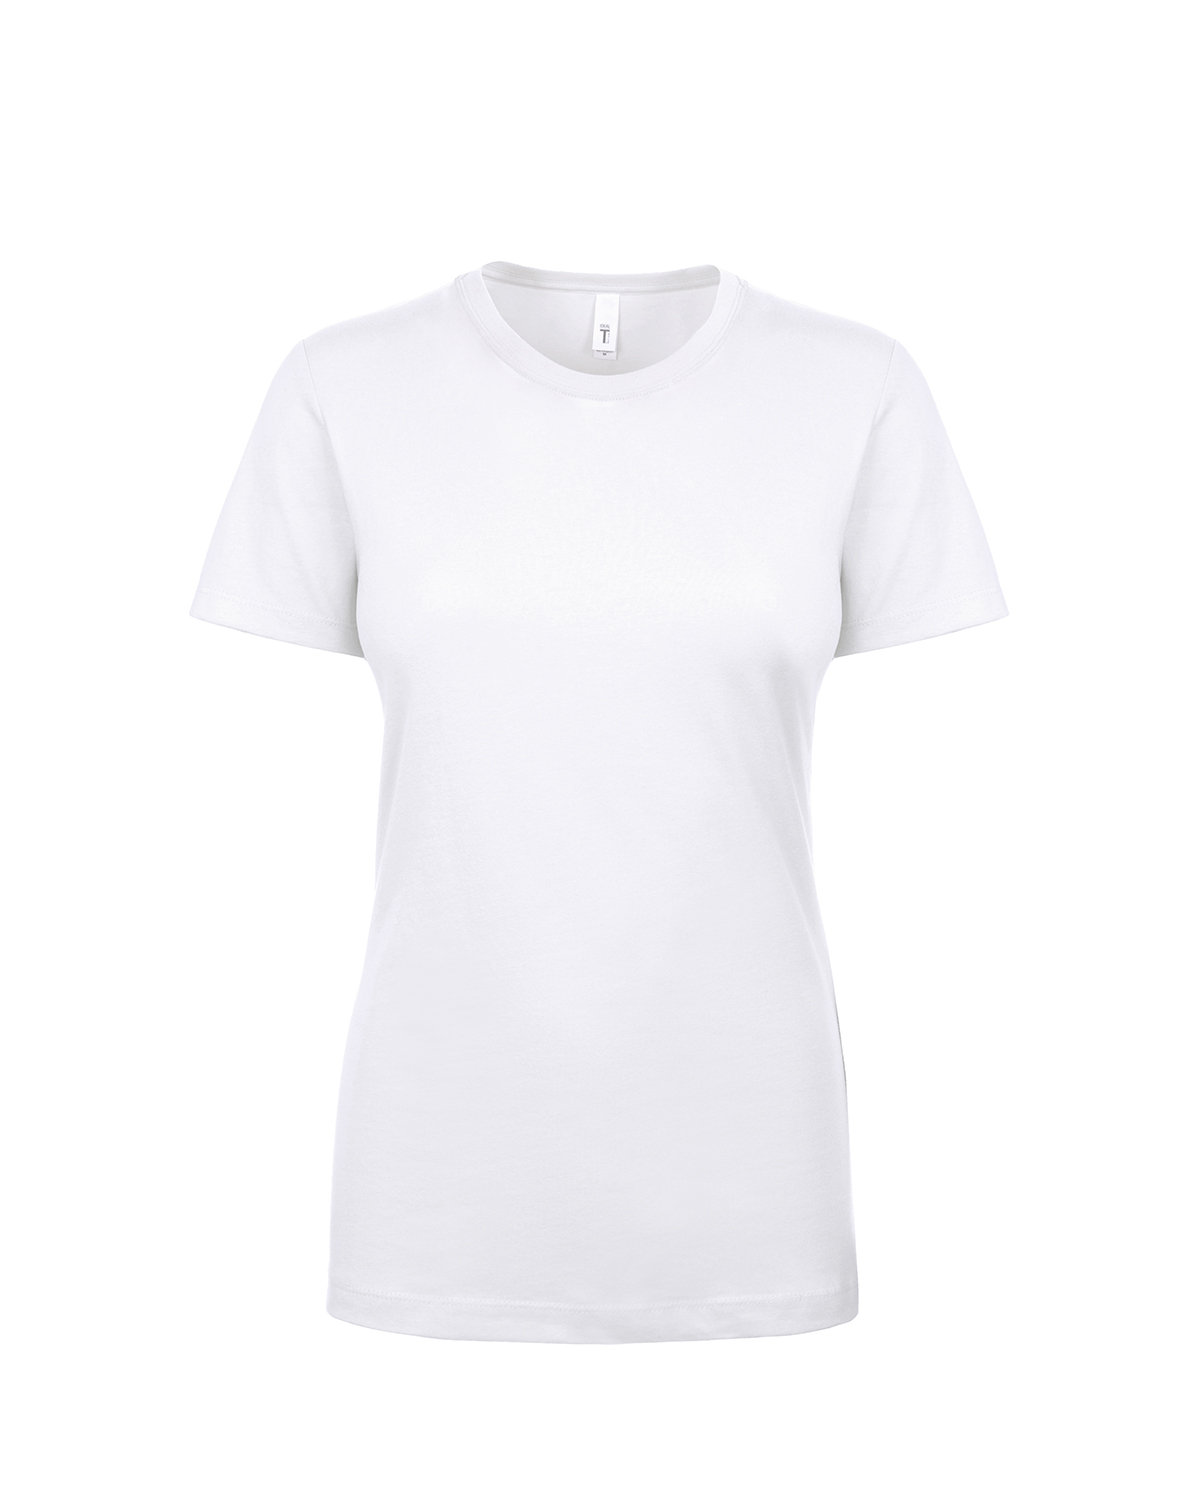 Next Level Apparel Ladies' Ideal T-Shirt | alphabroder